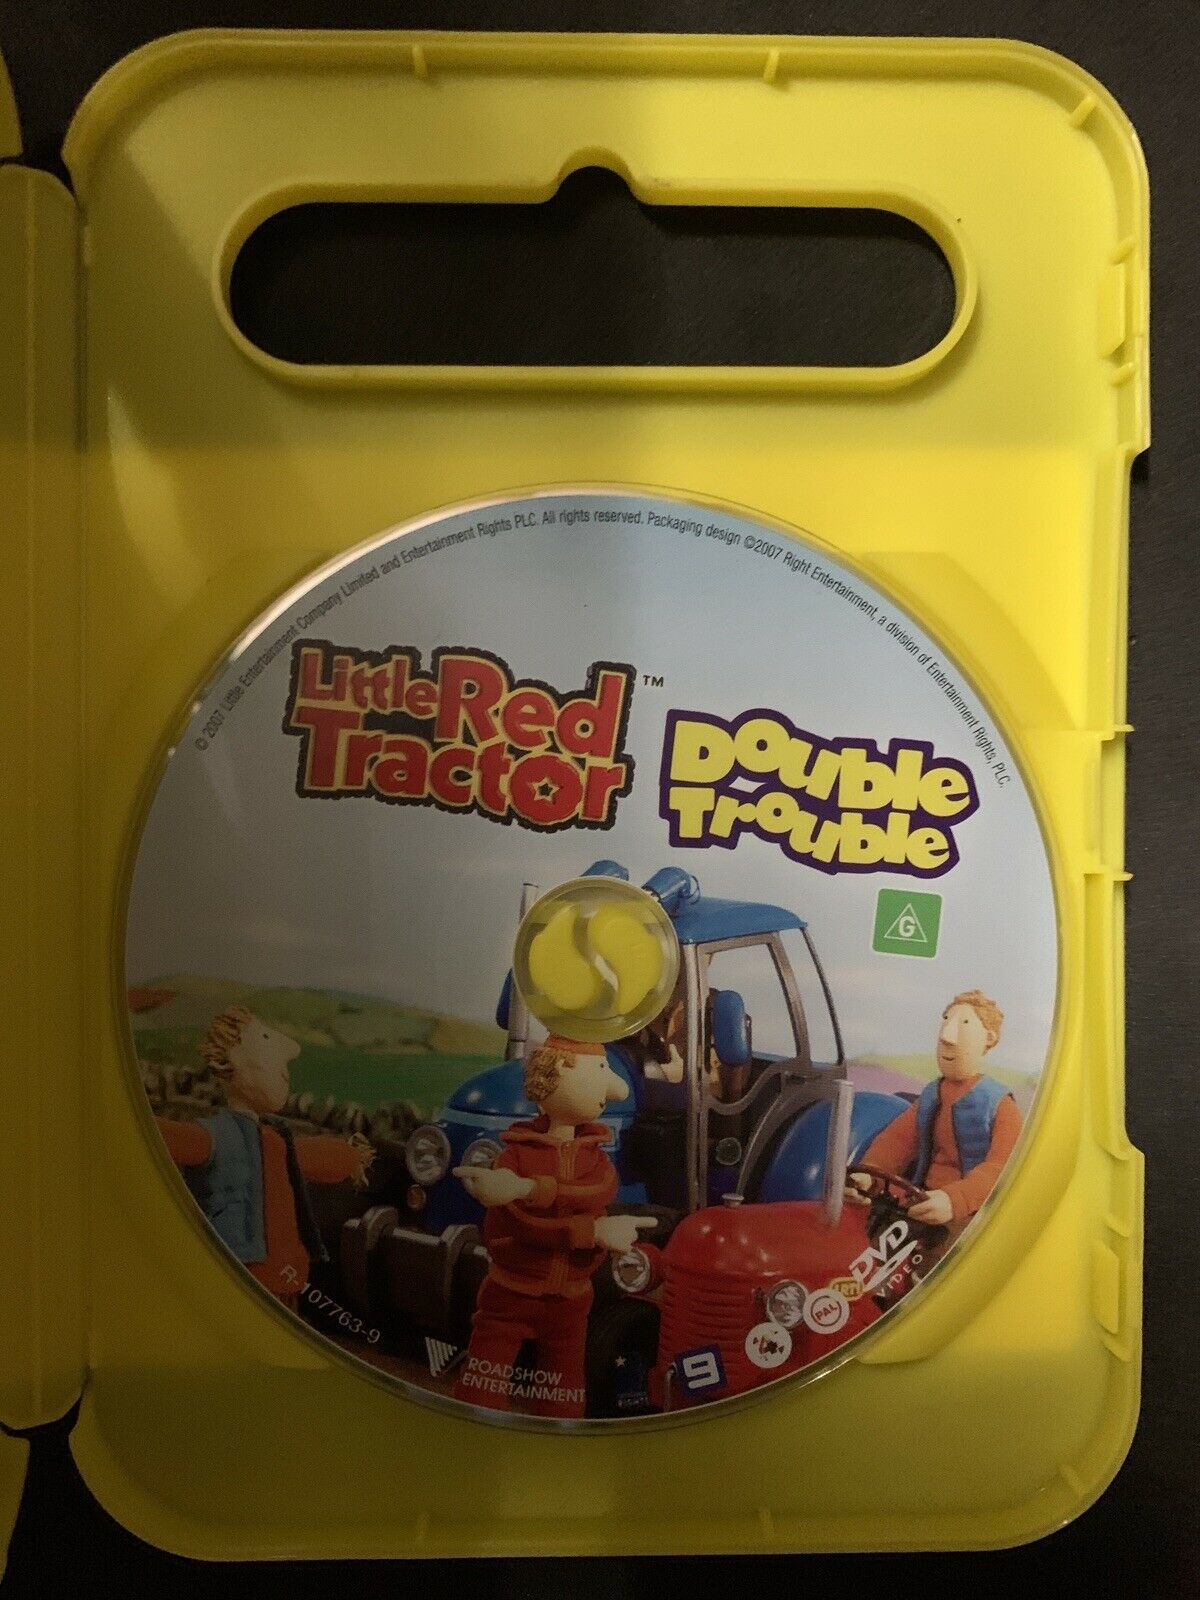 Little Red Tractor - Double Trouble (DVD) Region 4